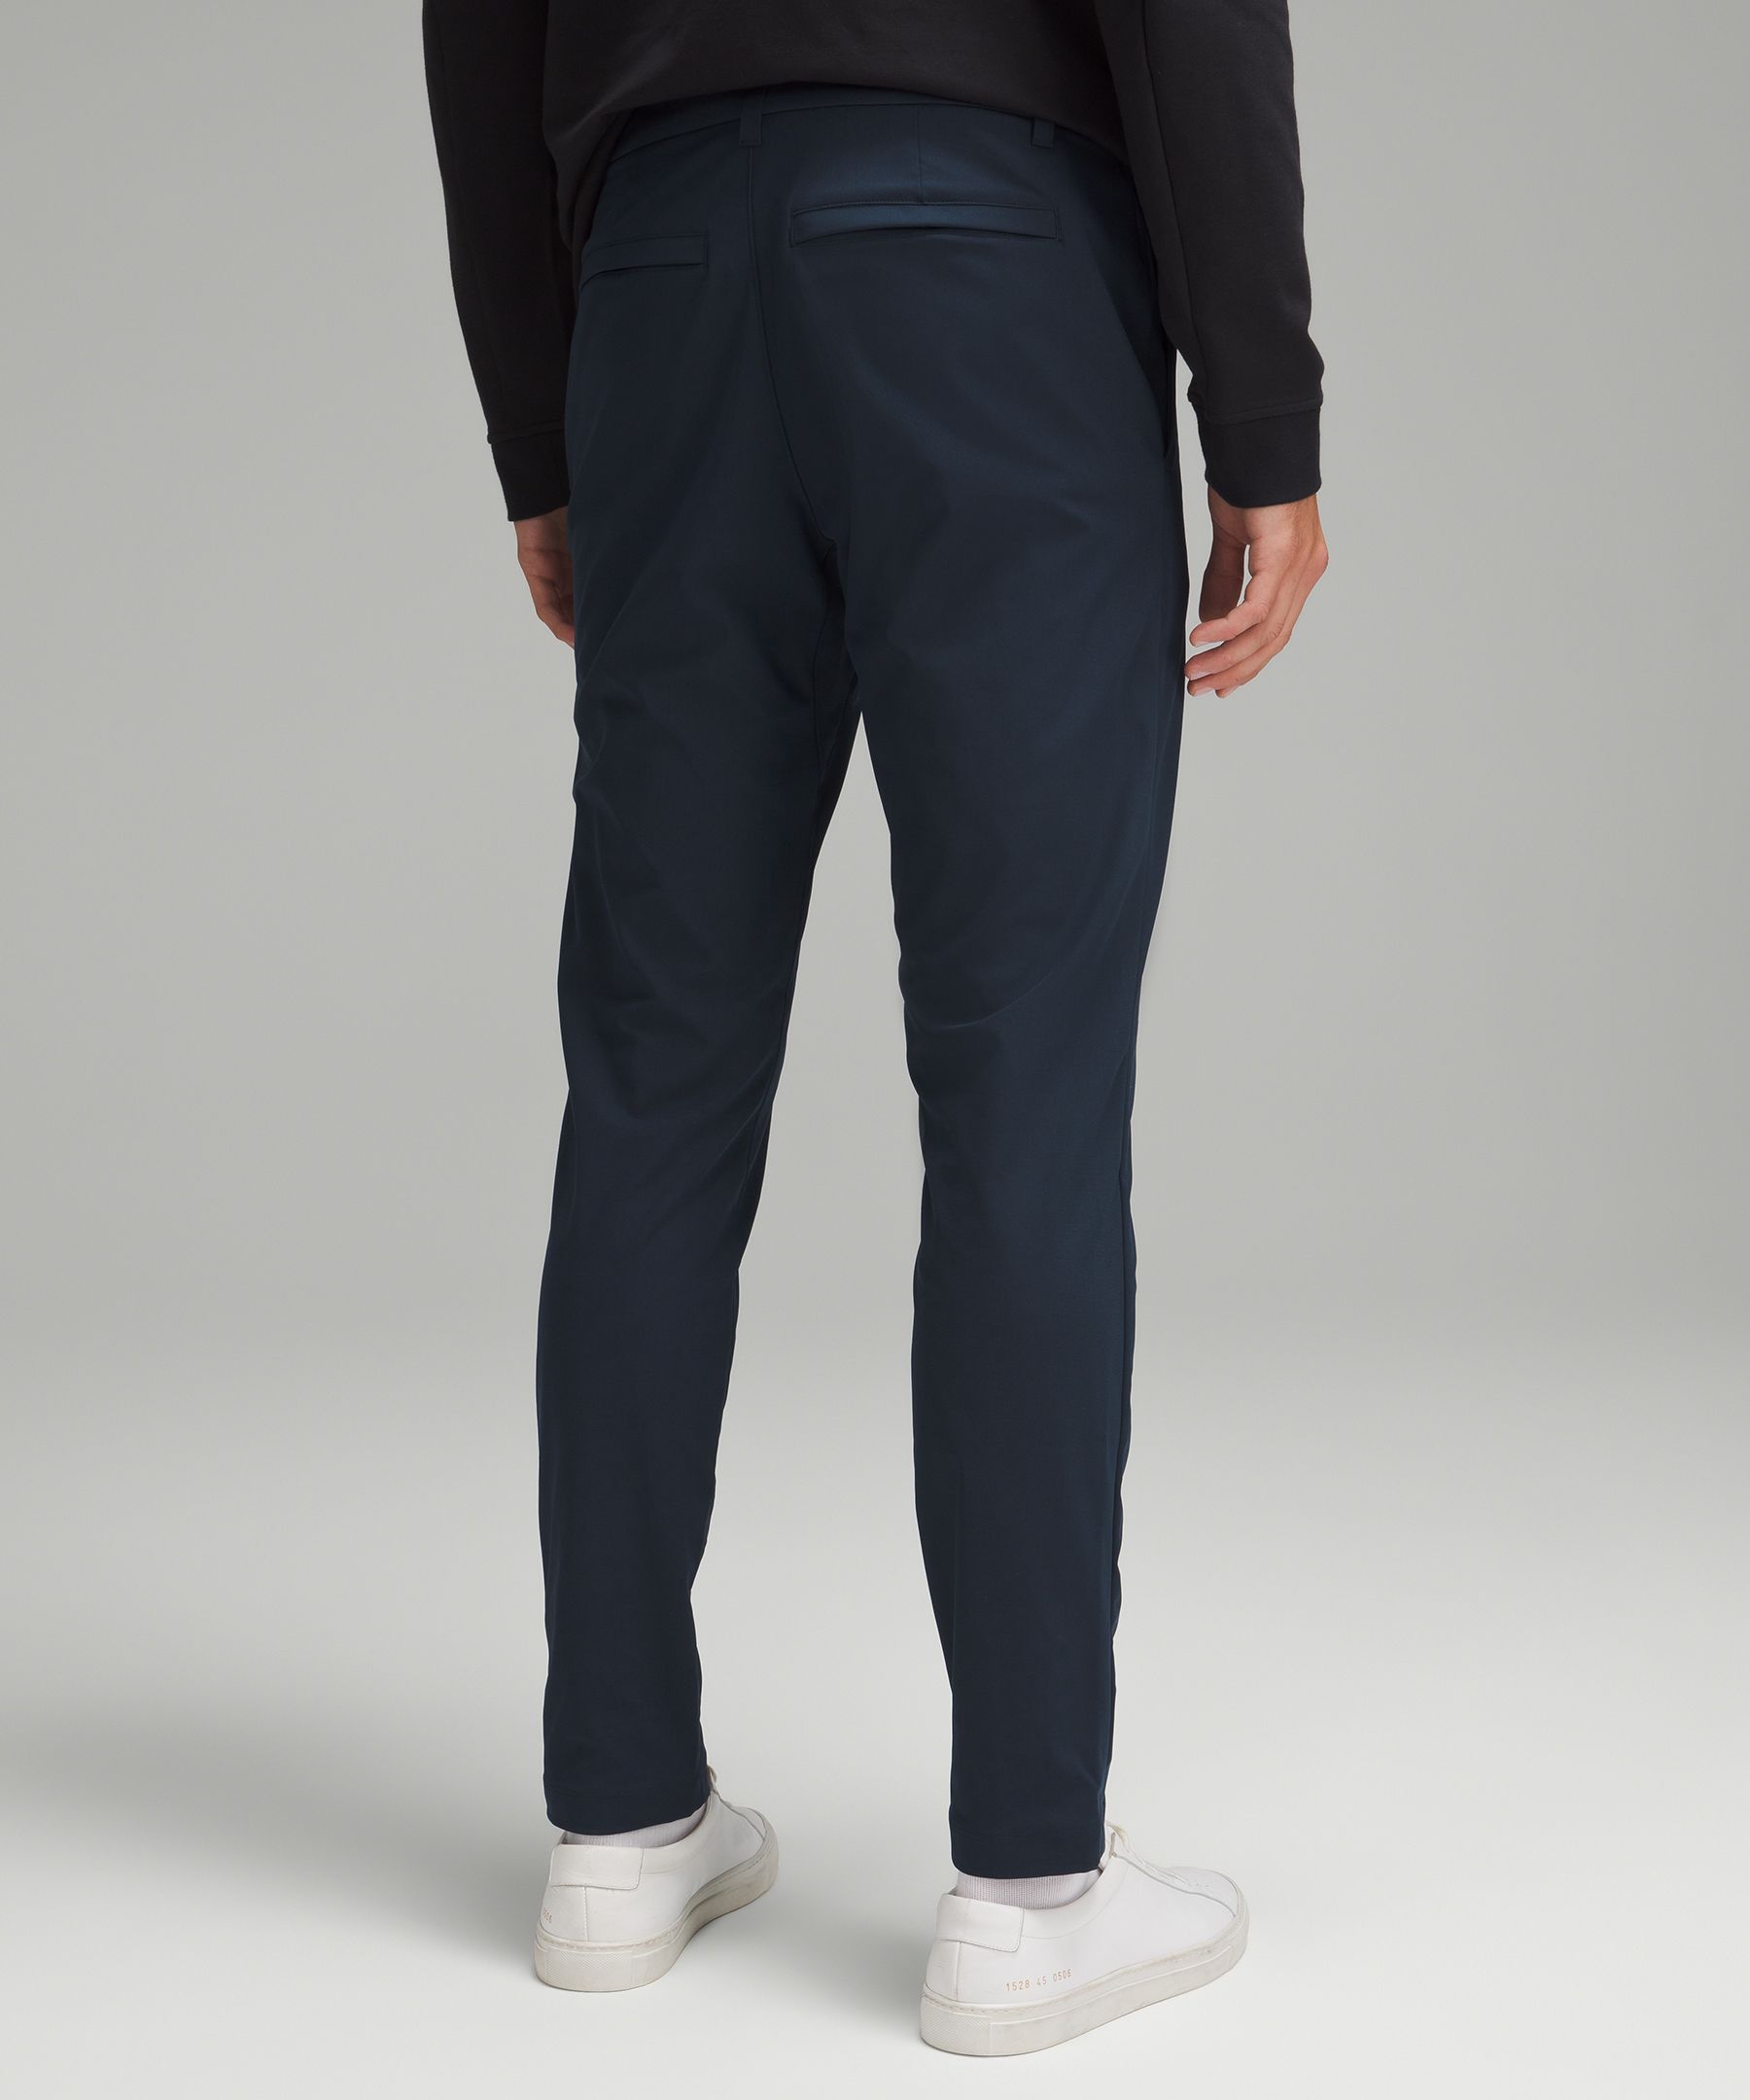 Commission / ABC slim-fit (new name) 28” waist, Men's Fashion